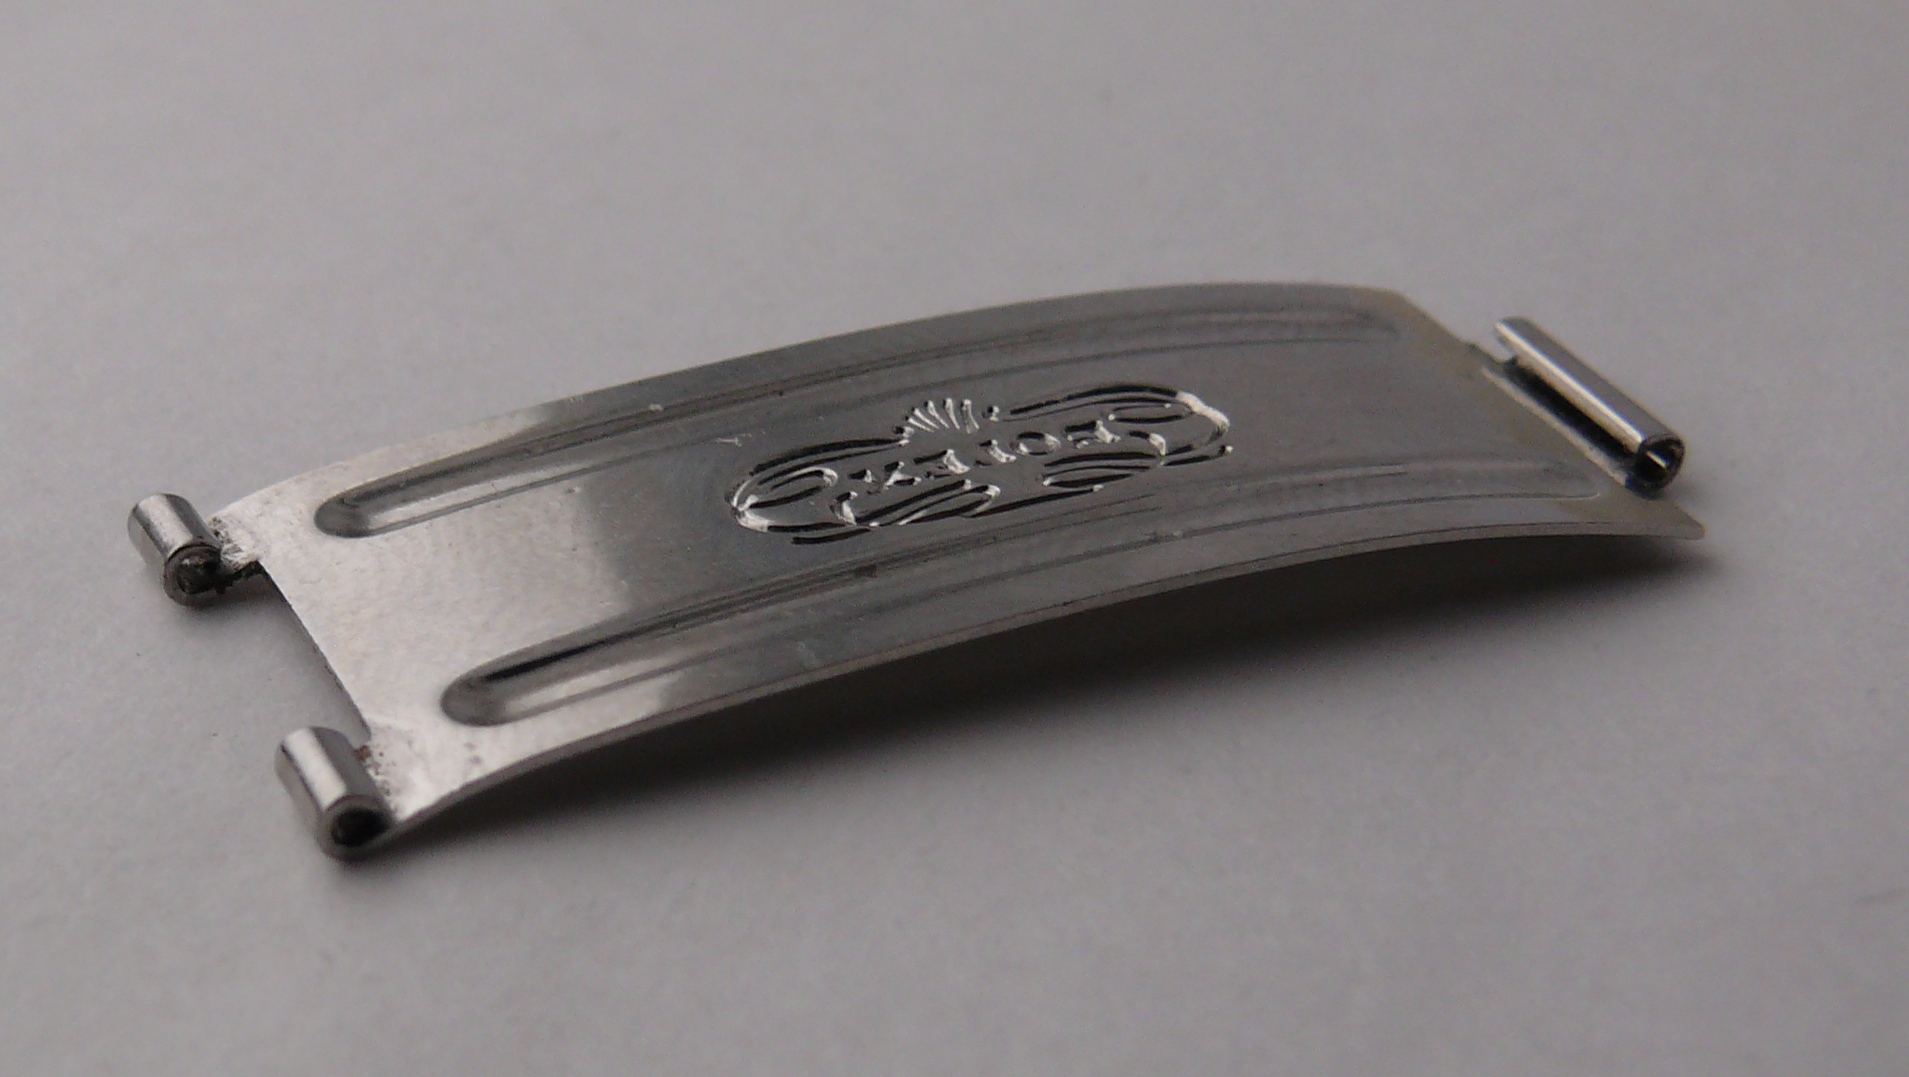 Vintage Rolex 20mm 93150 Flip Lock Bracelet Clasp Part. Date code J8 = 1985 - Image 5 of 5